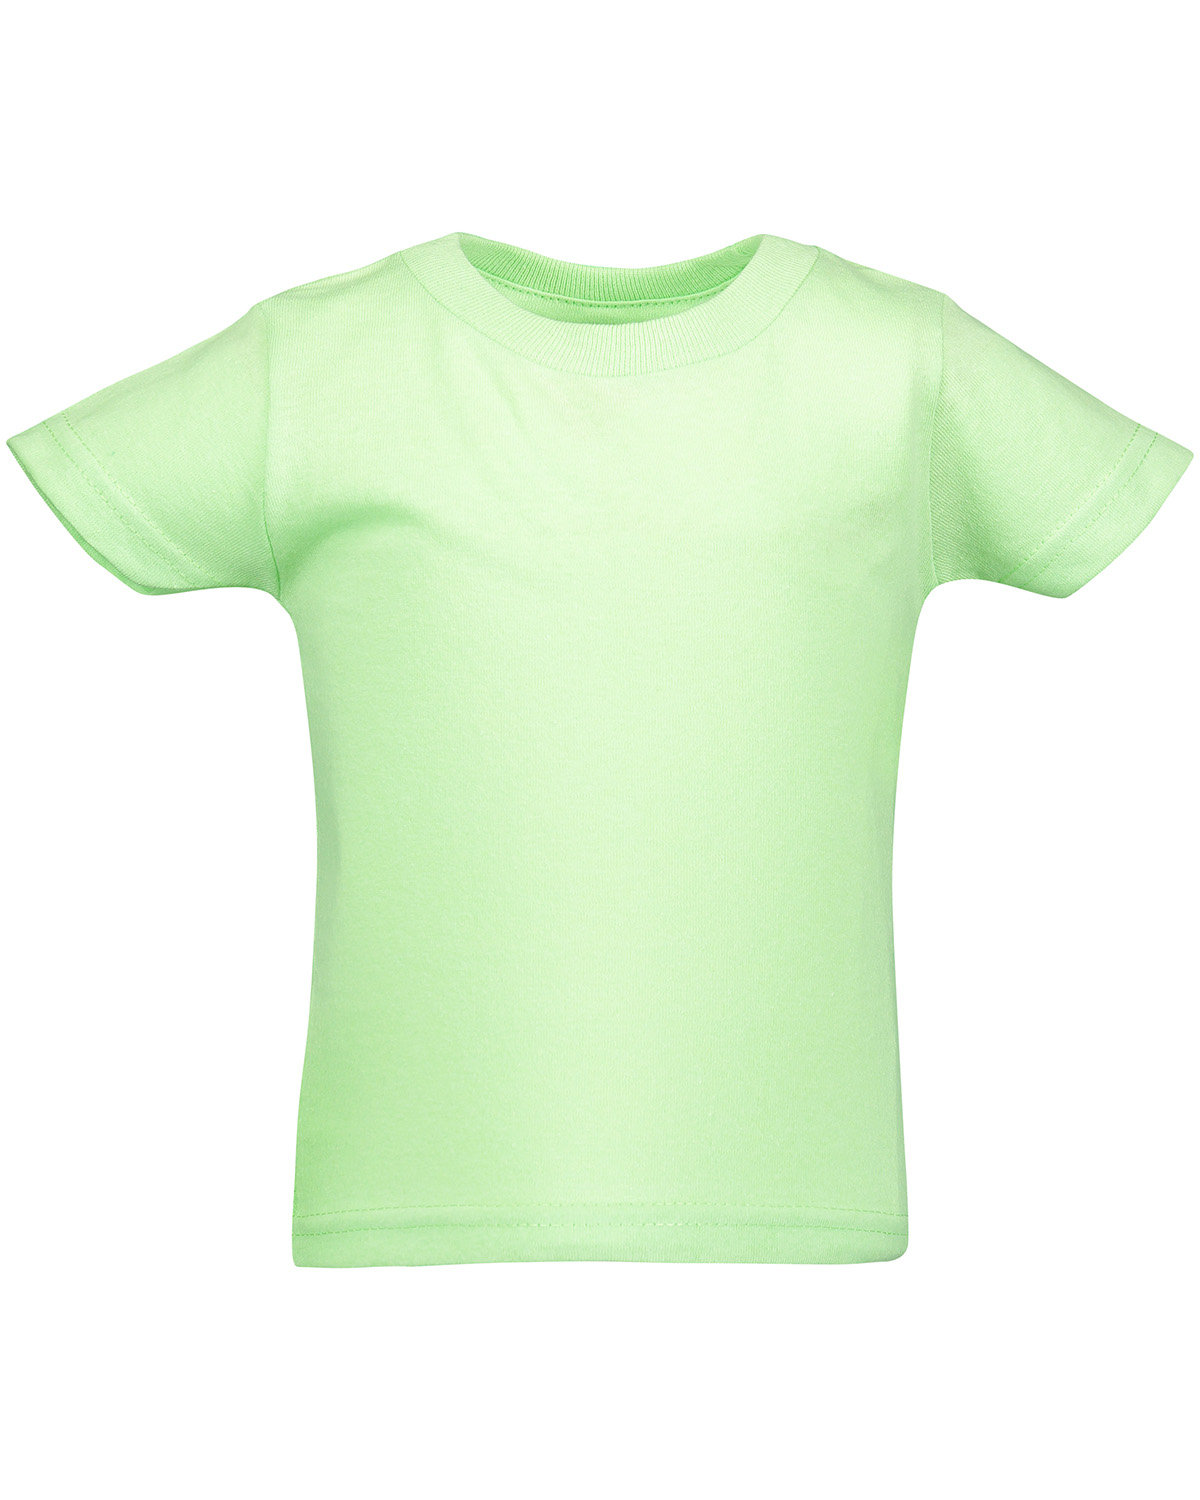 Rabbit Skins Infant Cotton Jersey T-Shirt KEY LIME 